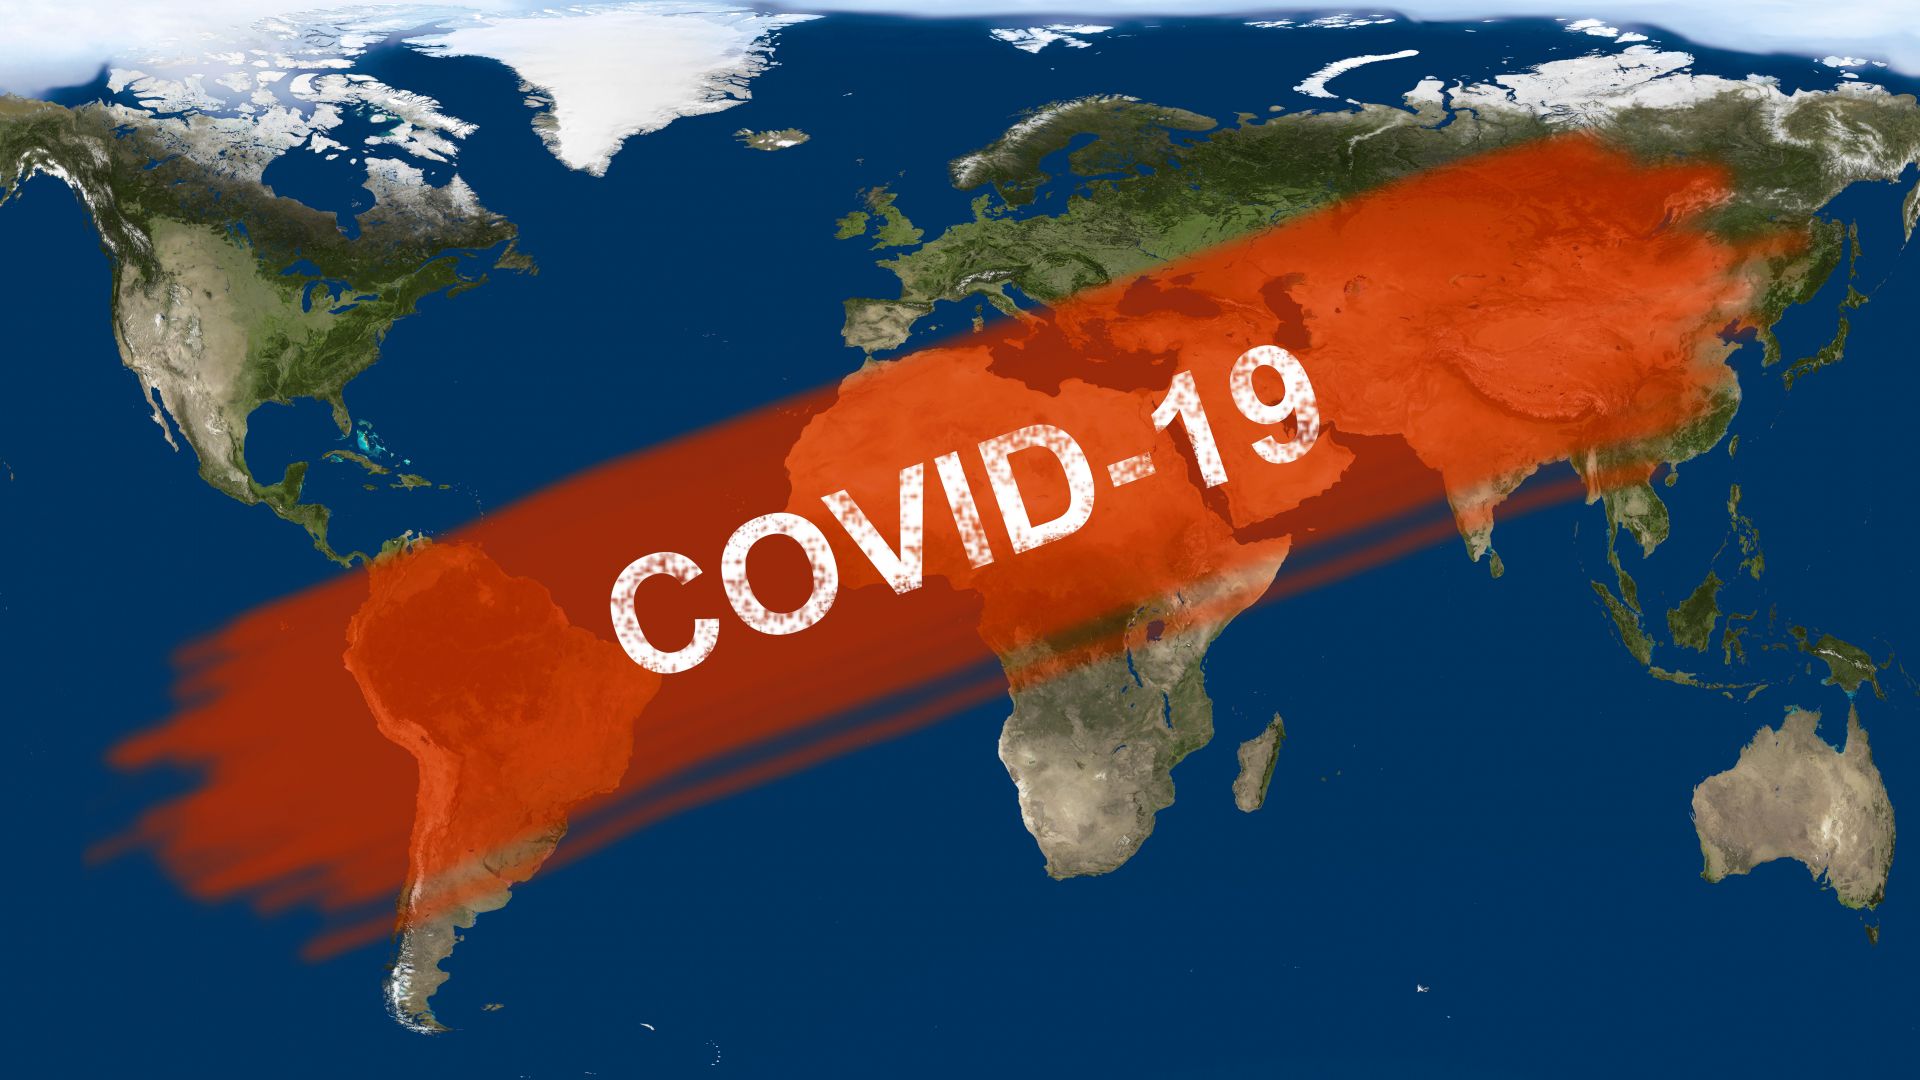 COVID-19 Corona virus